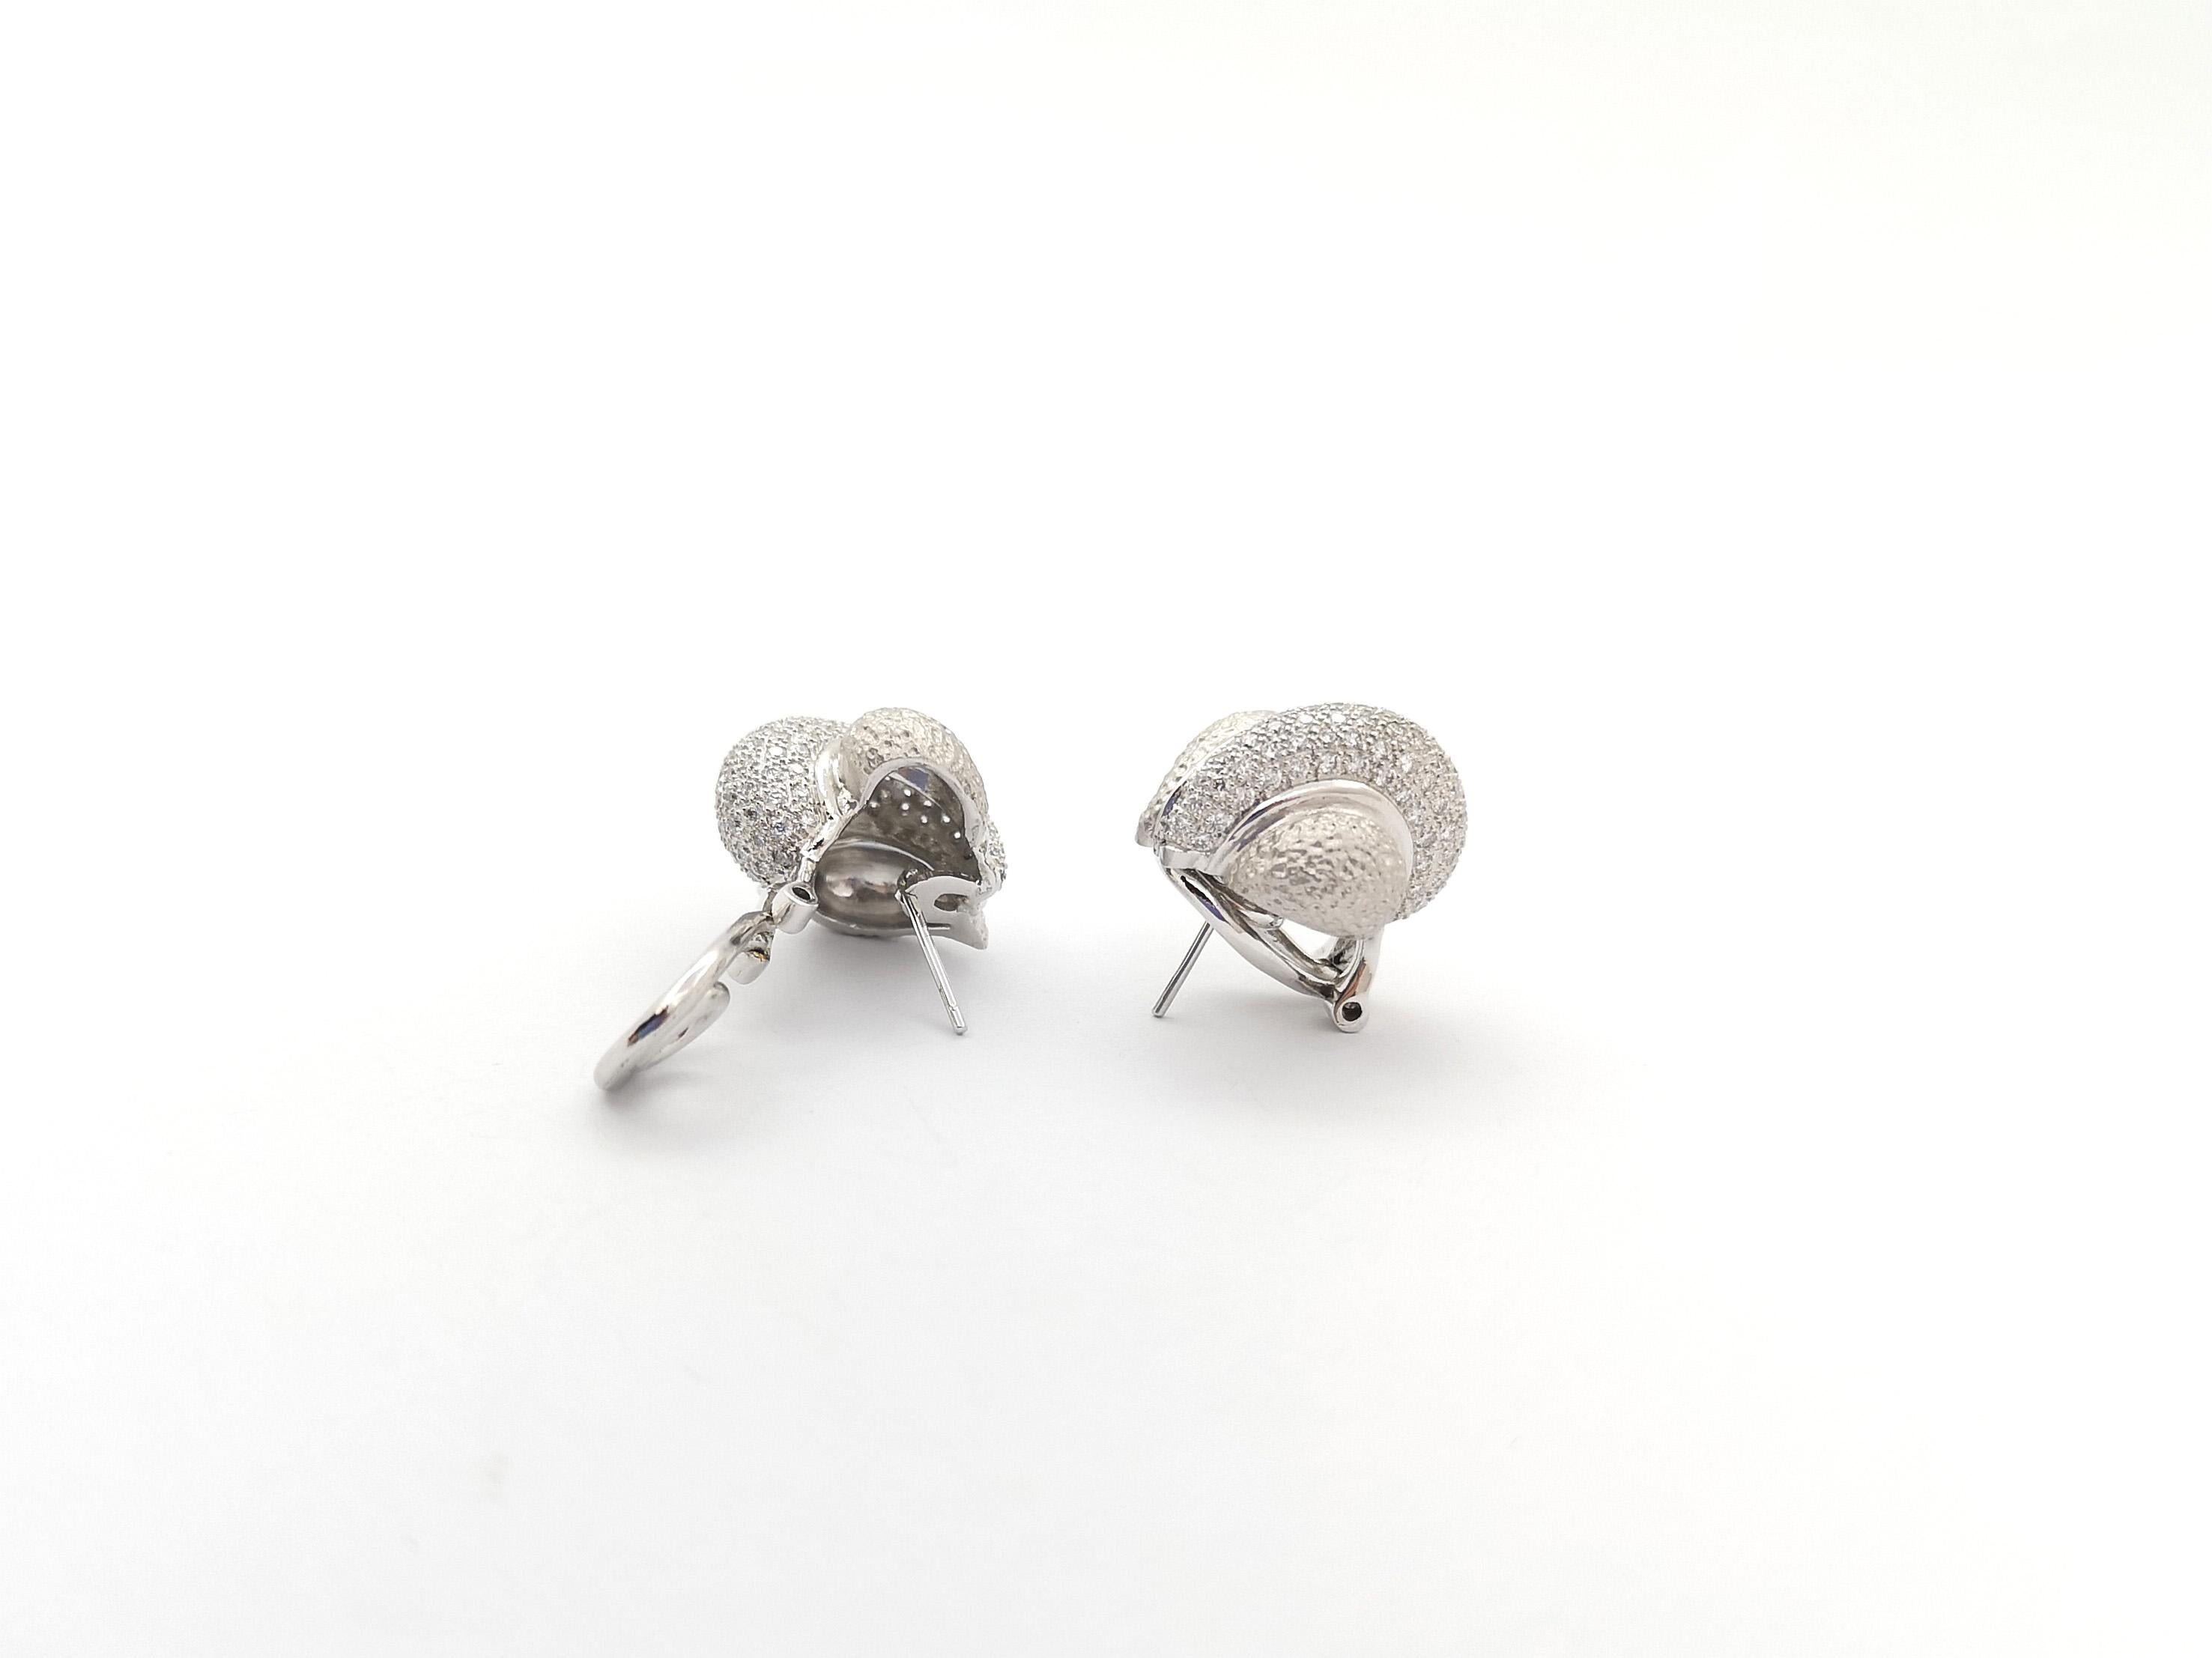 Brilliant Cut Diamond Earrings set in 18K White Gold Settings For Sale